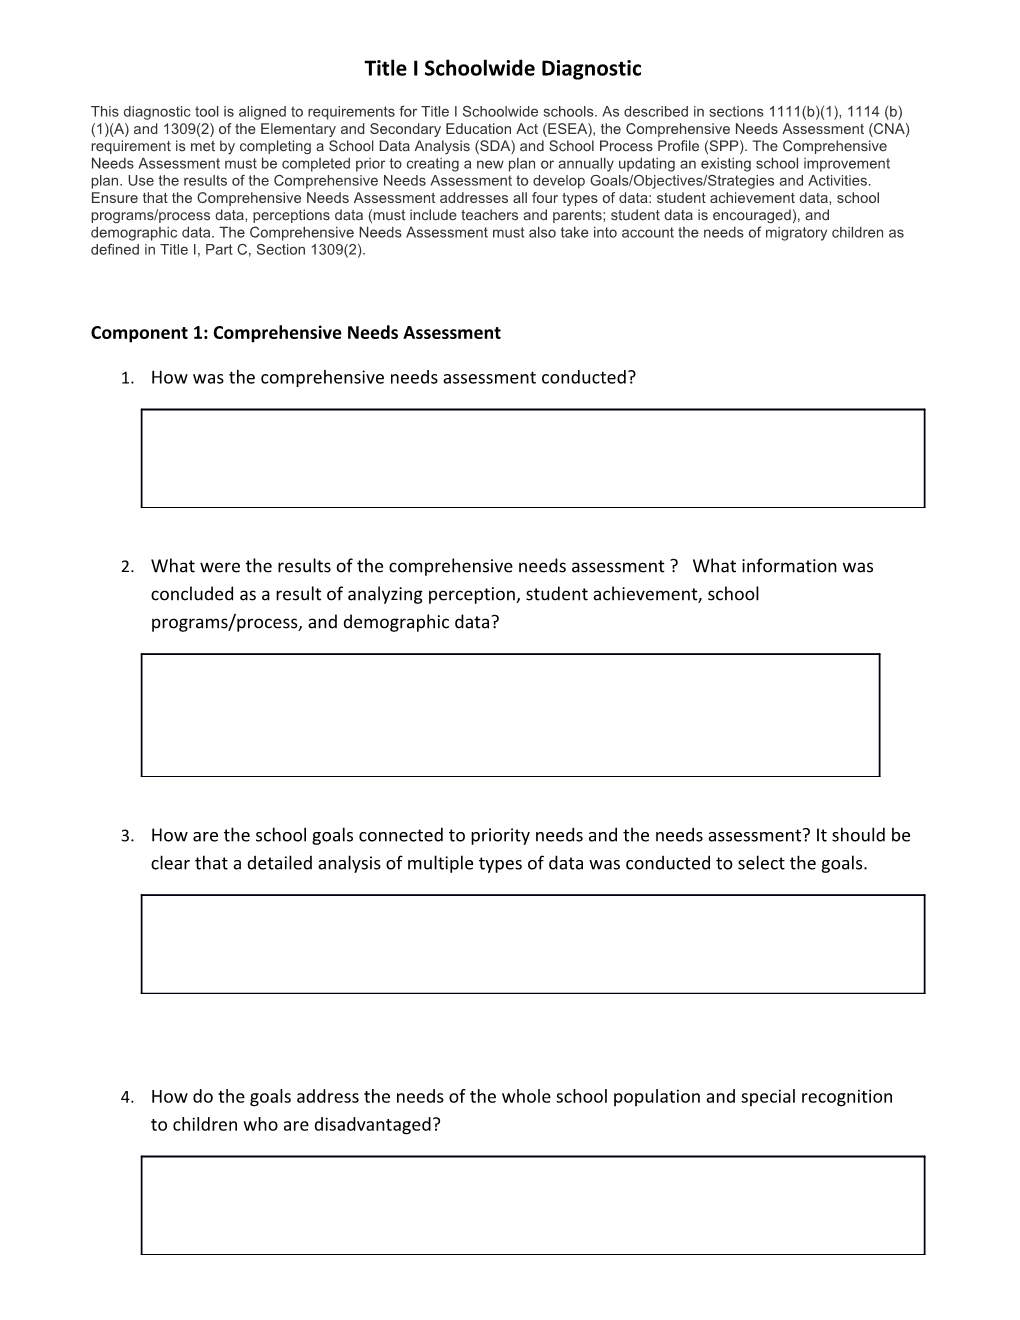 Component 1: Comprehensive Needs Assessment